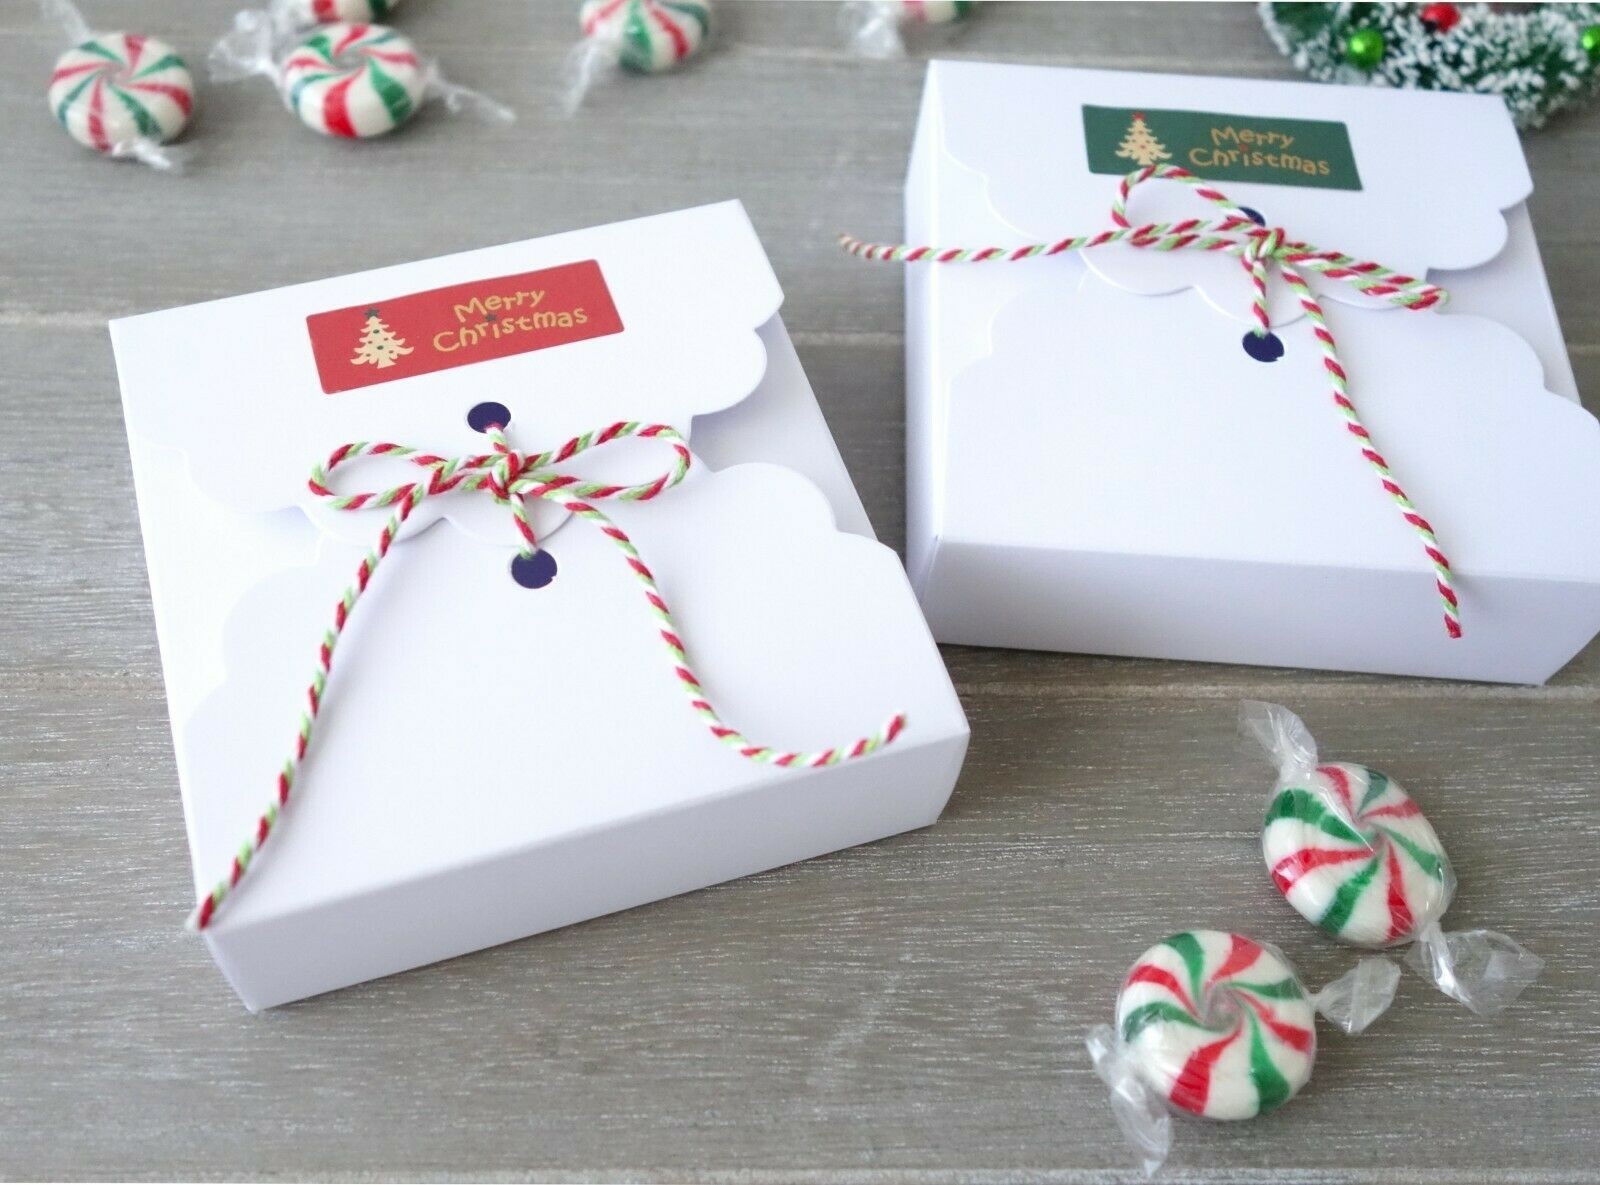 Christmas White Cookies Boxes 10x10x3cm ($2.00 X 10 units)